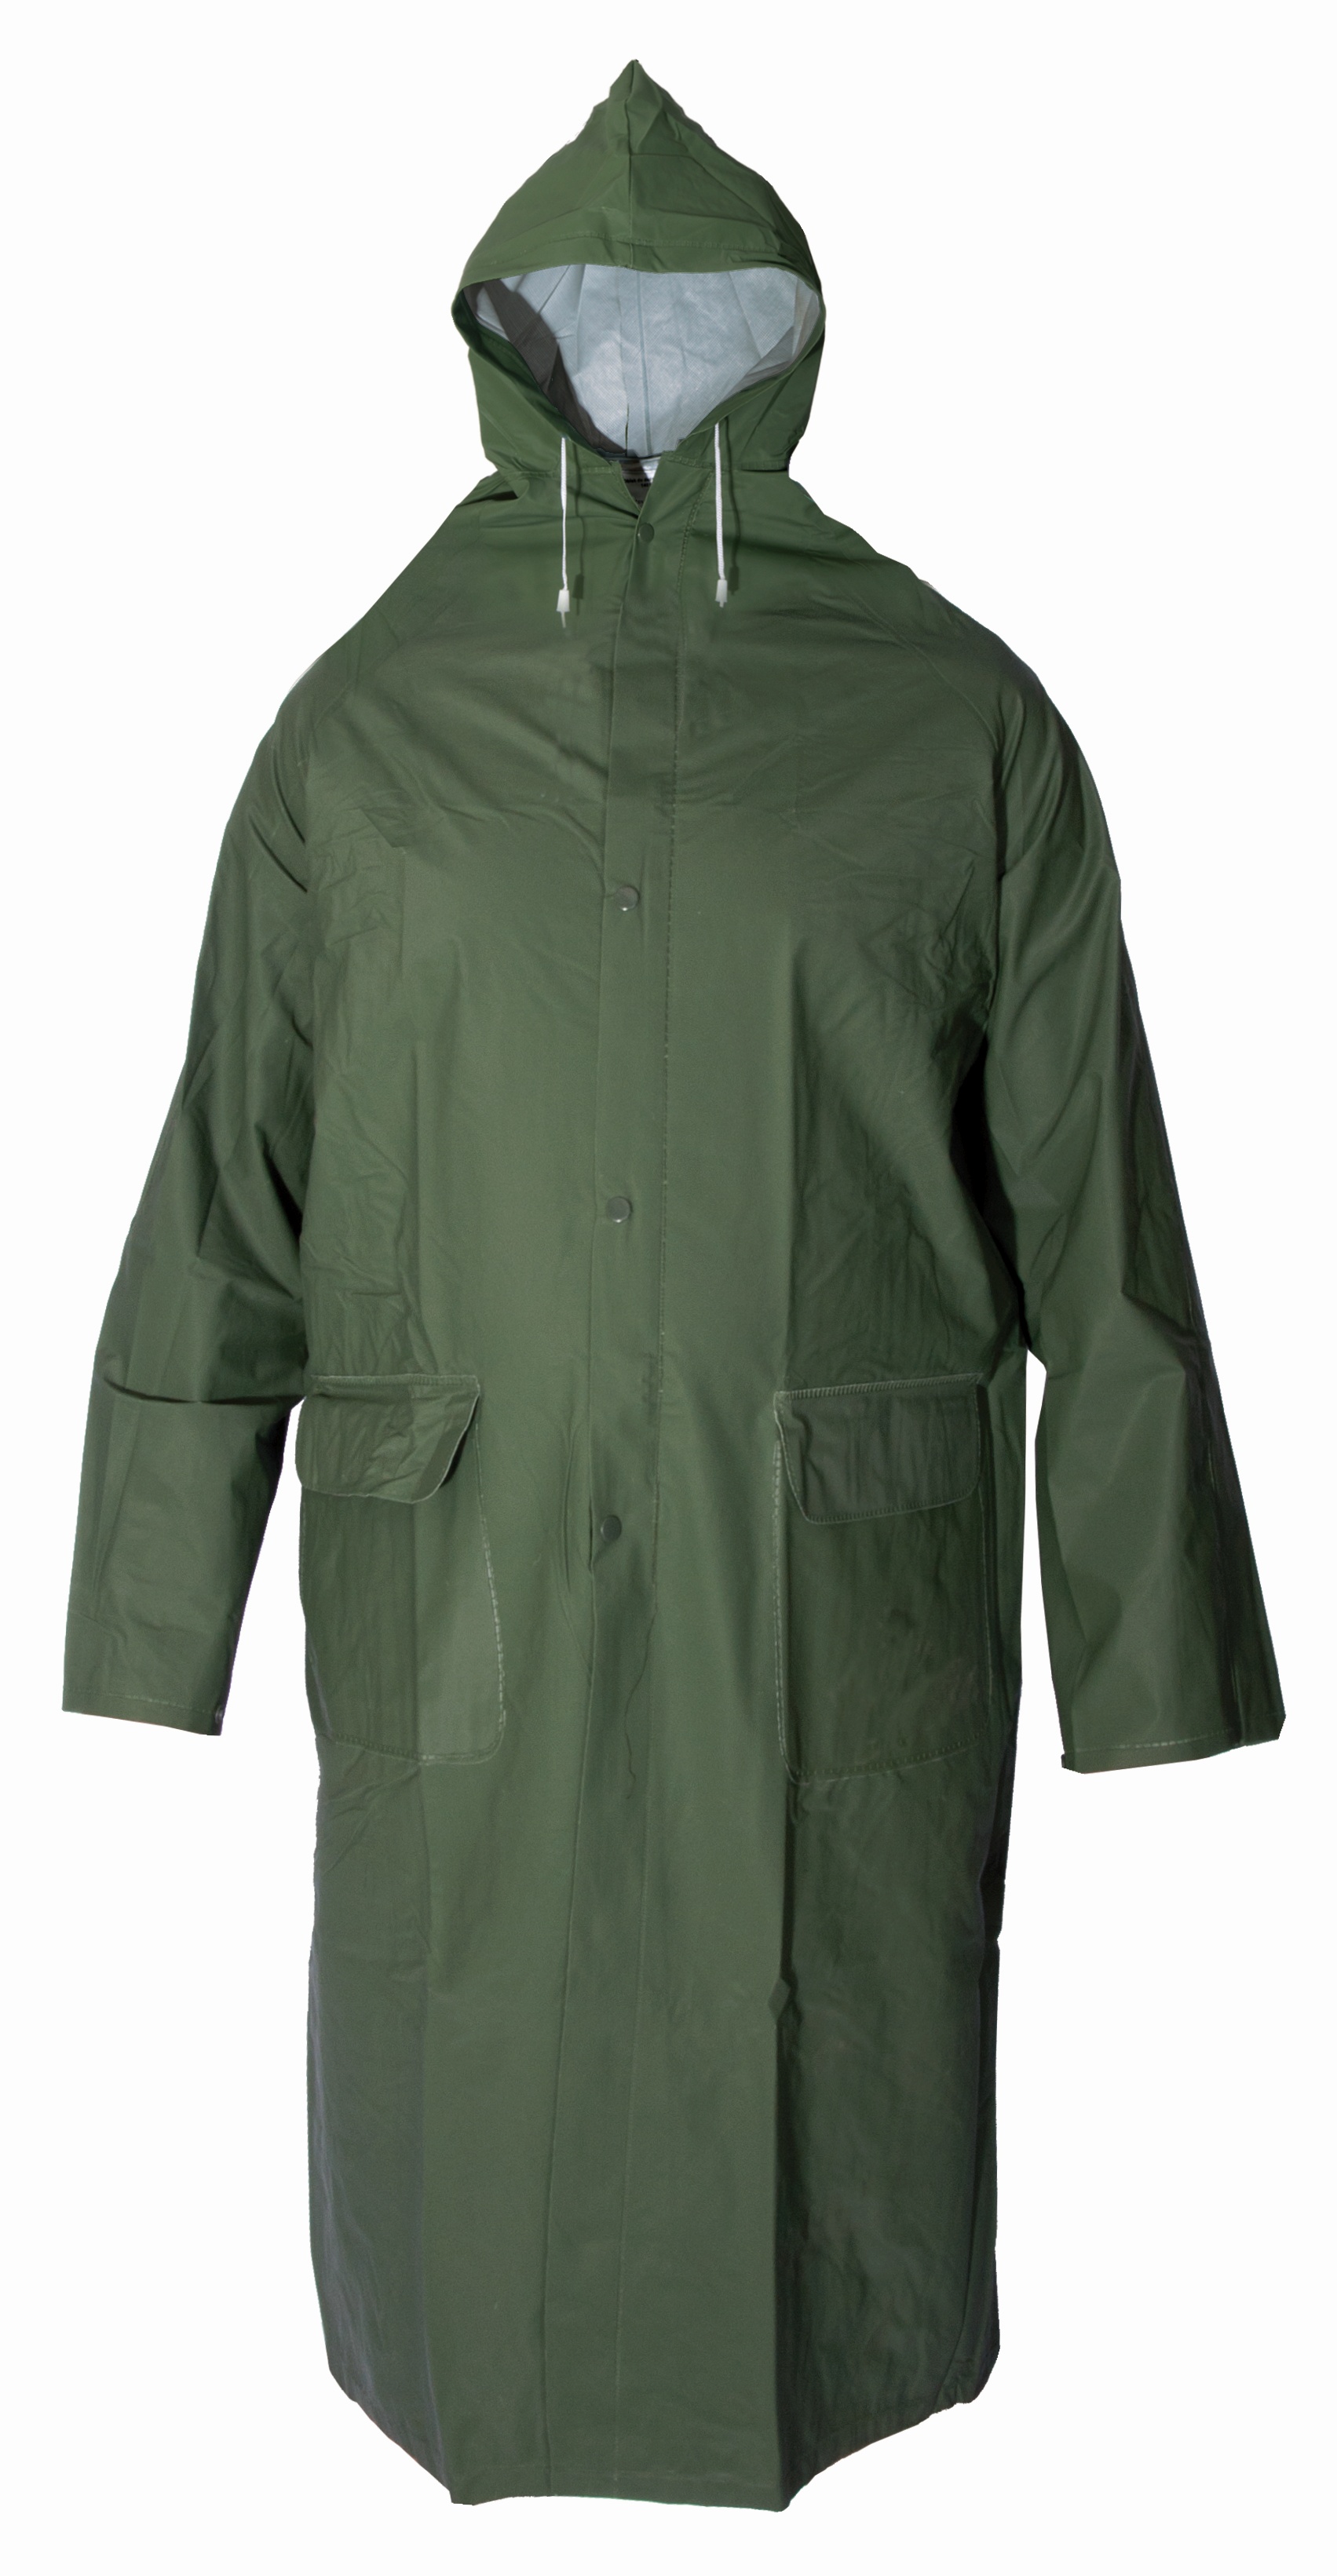 Voděodolný plášť DEREK, nepromokavý, zelený